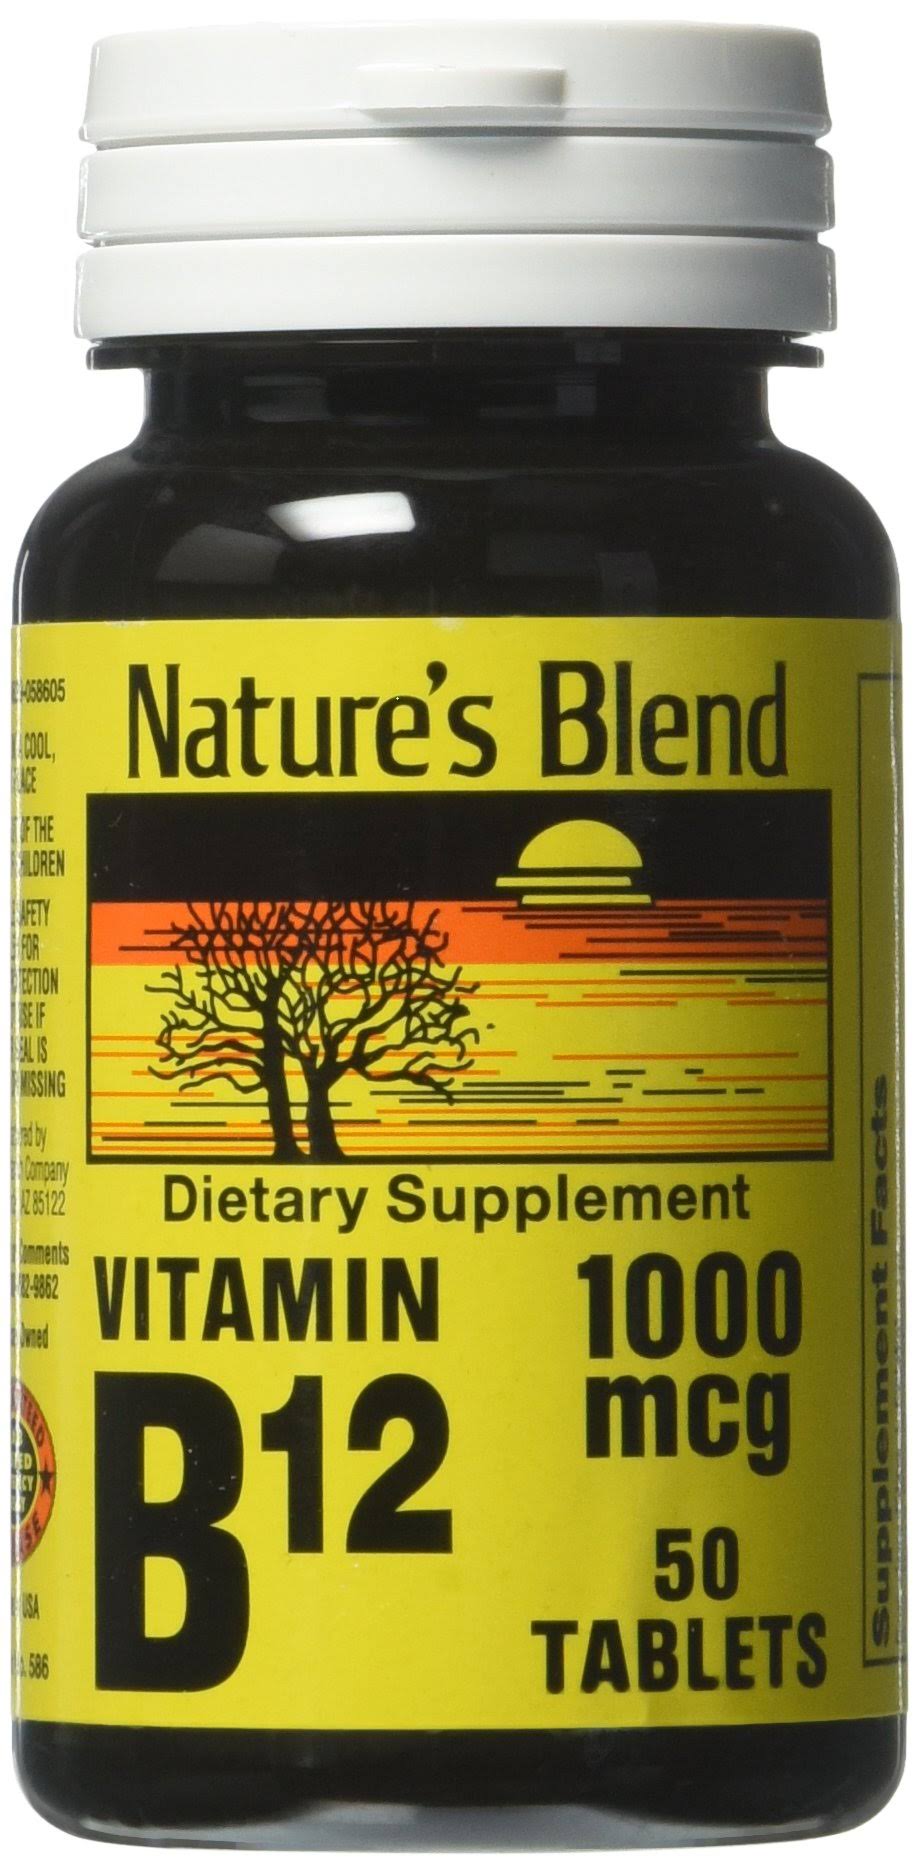 Nature's Blend Vitamin B12 - 1000mcg, 50 ct